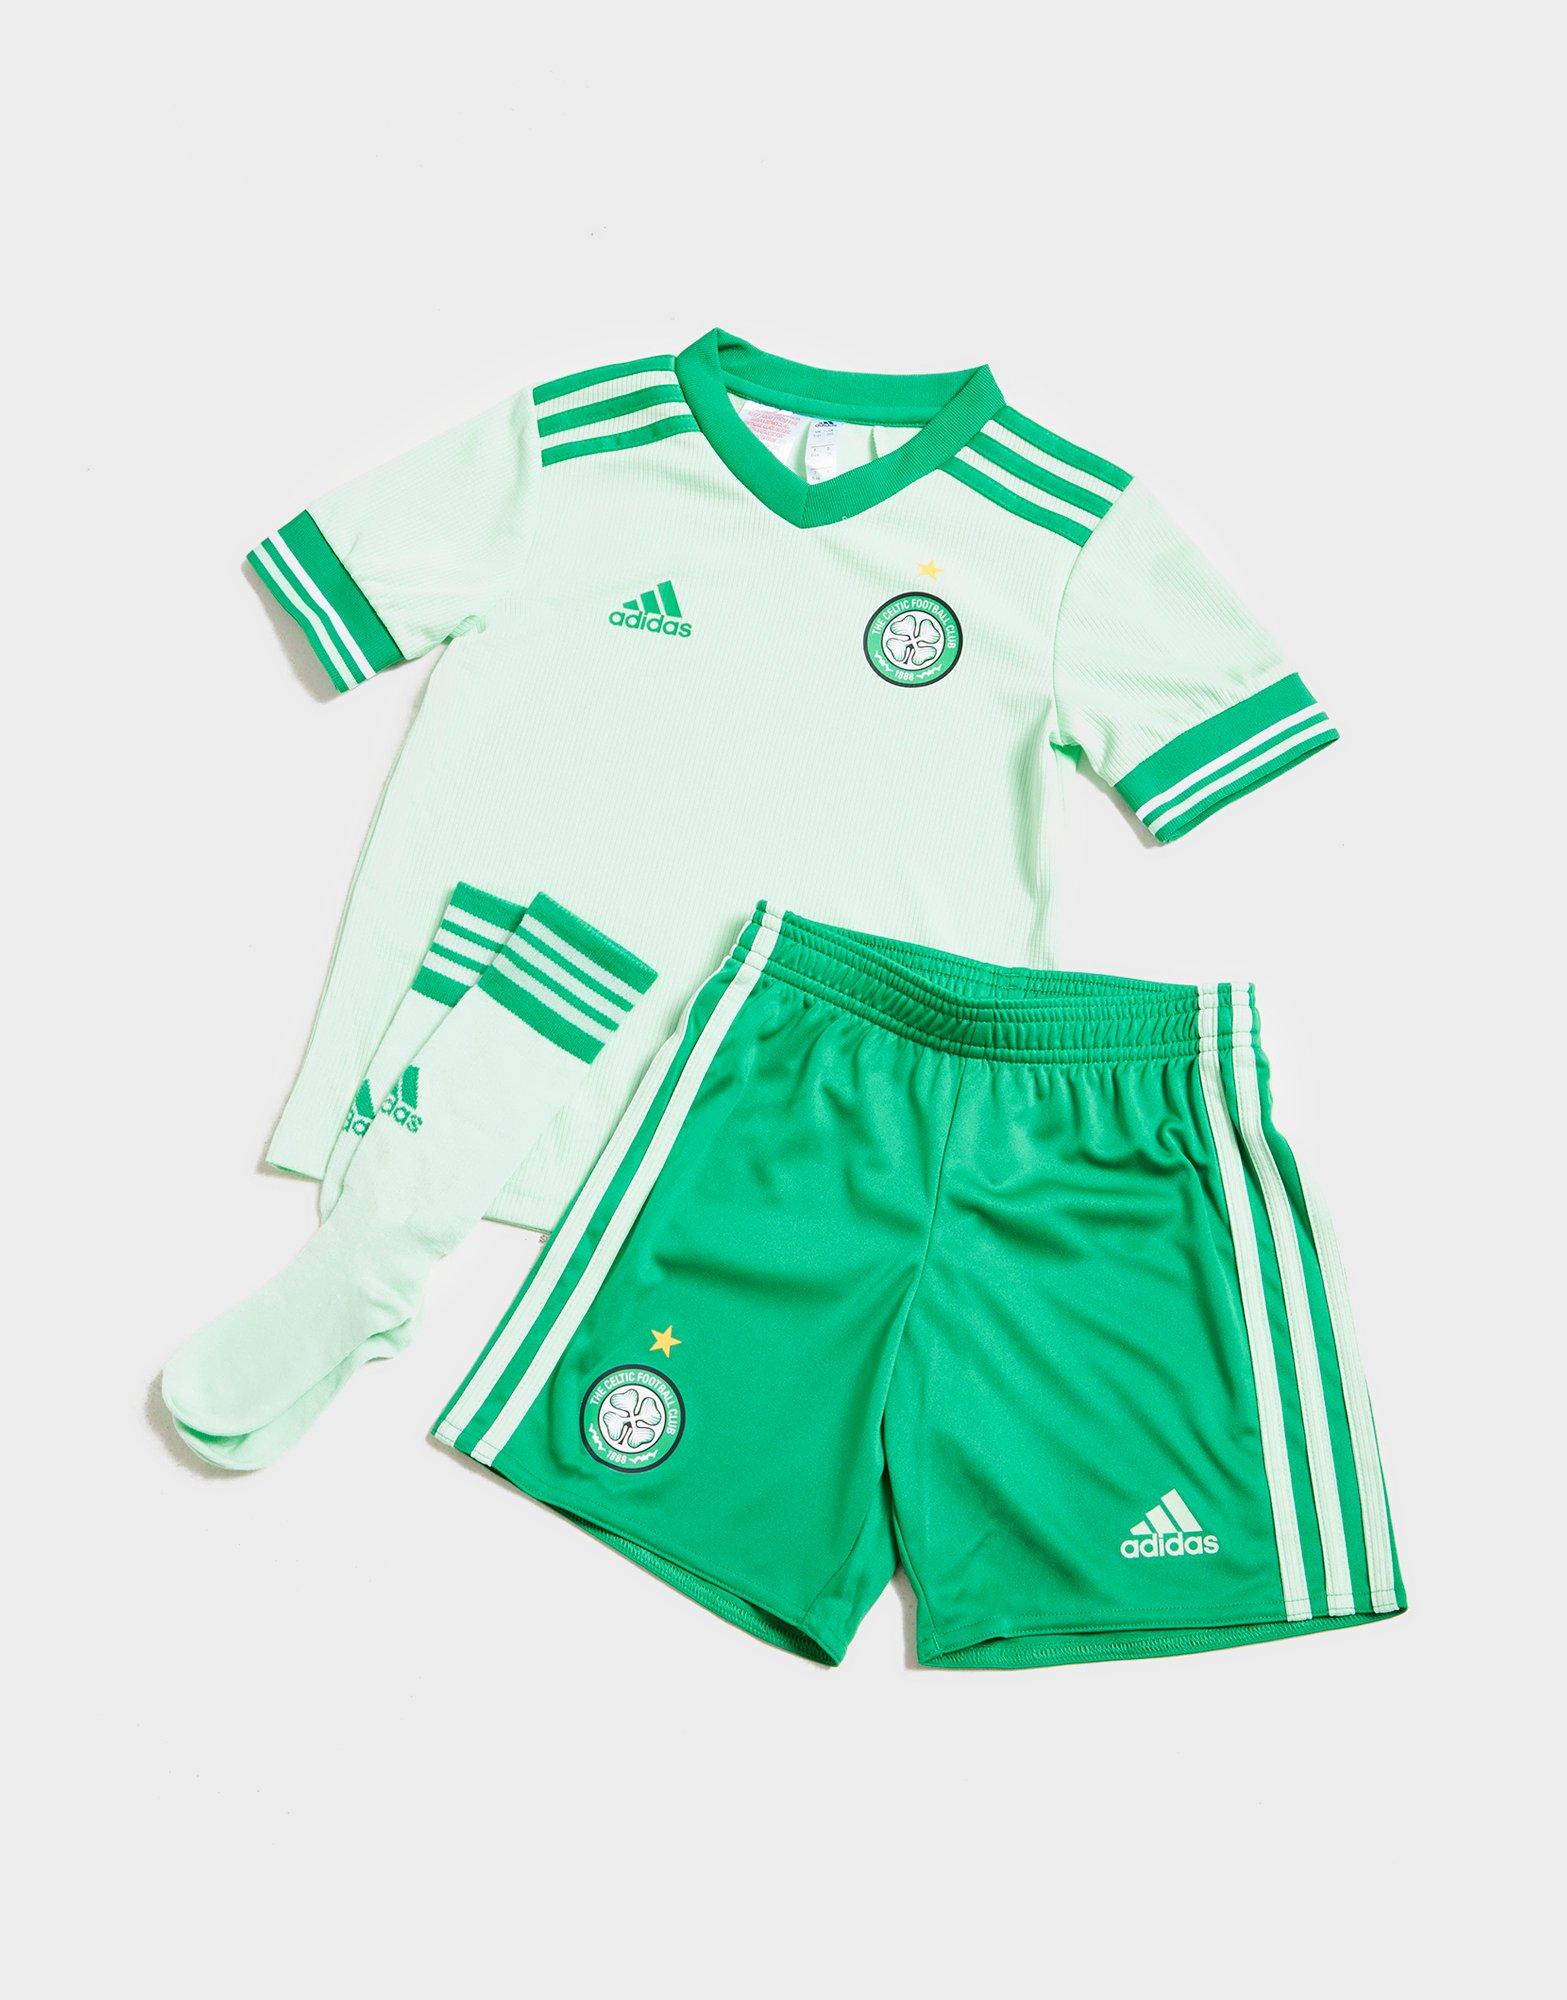 celtic adidas away kit